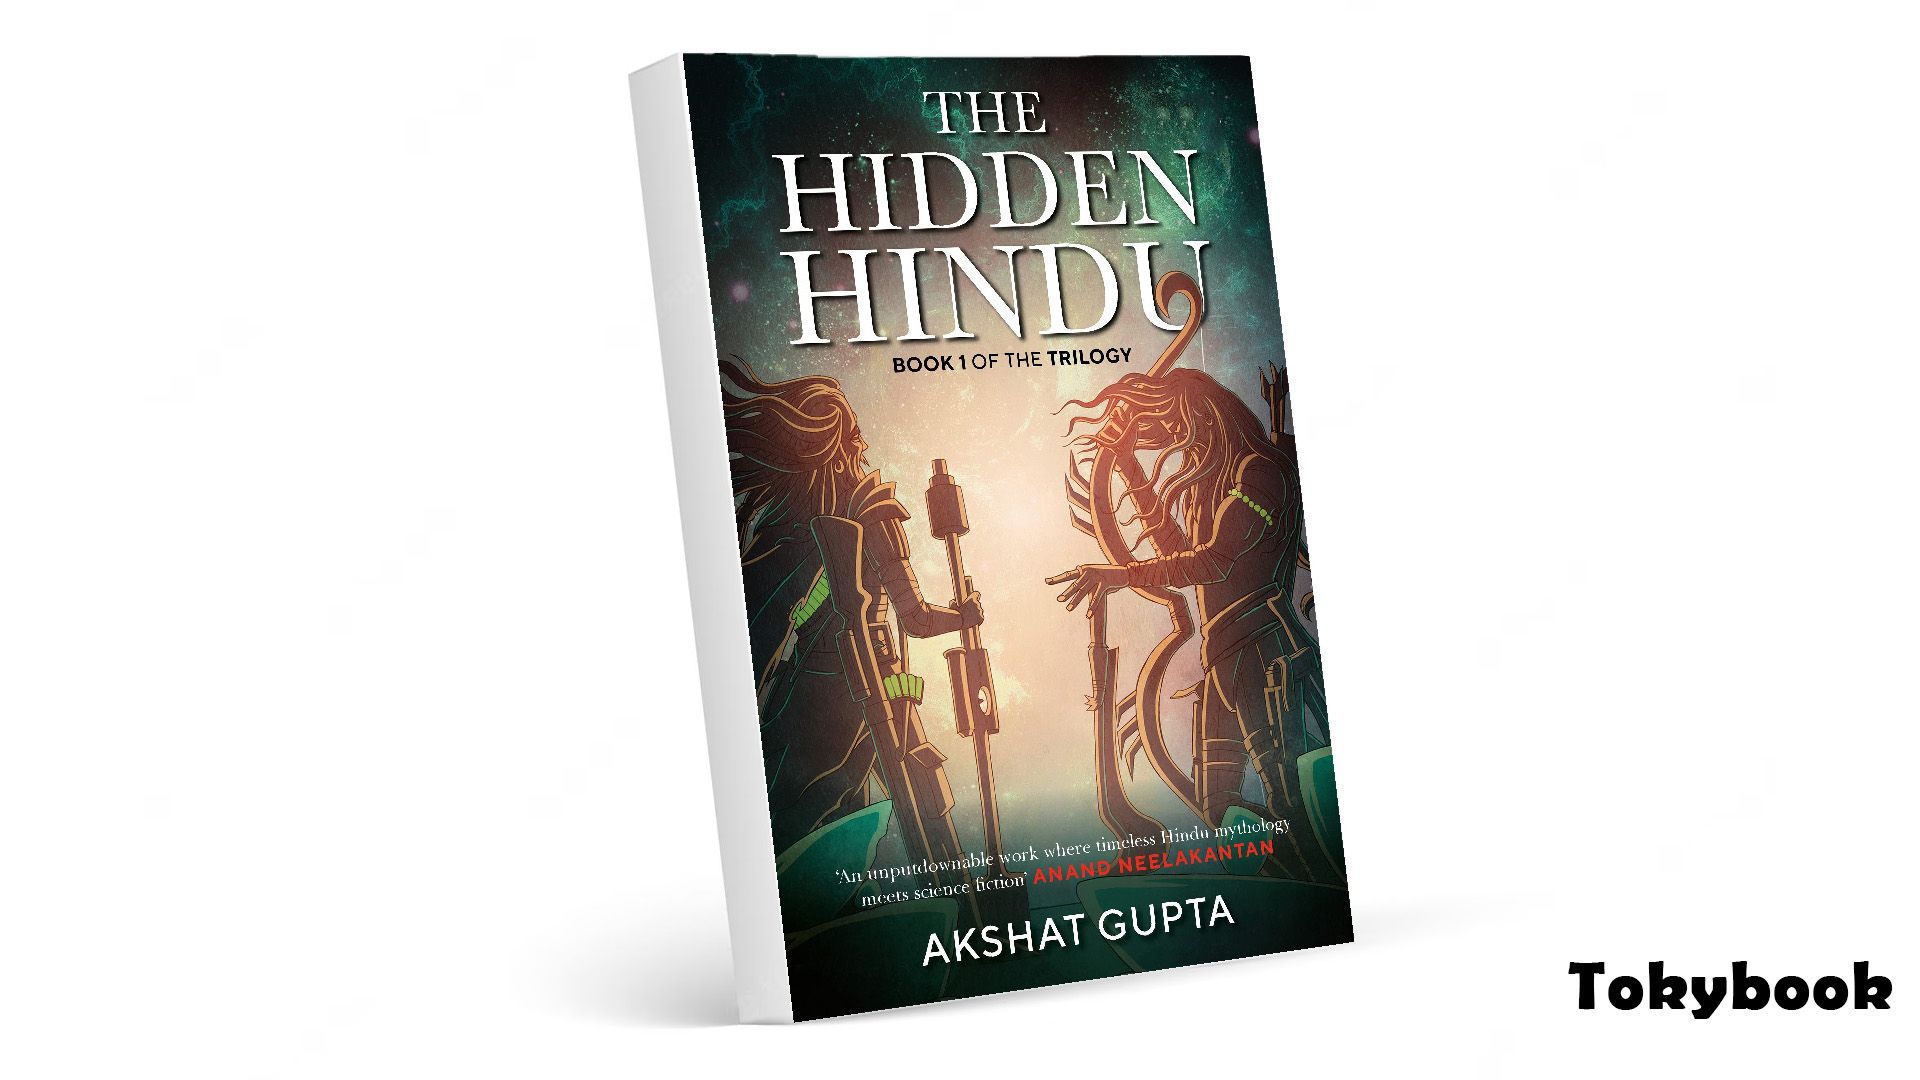 The Hidden Hindu audiobook by Akshat Gupta